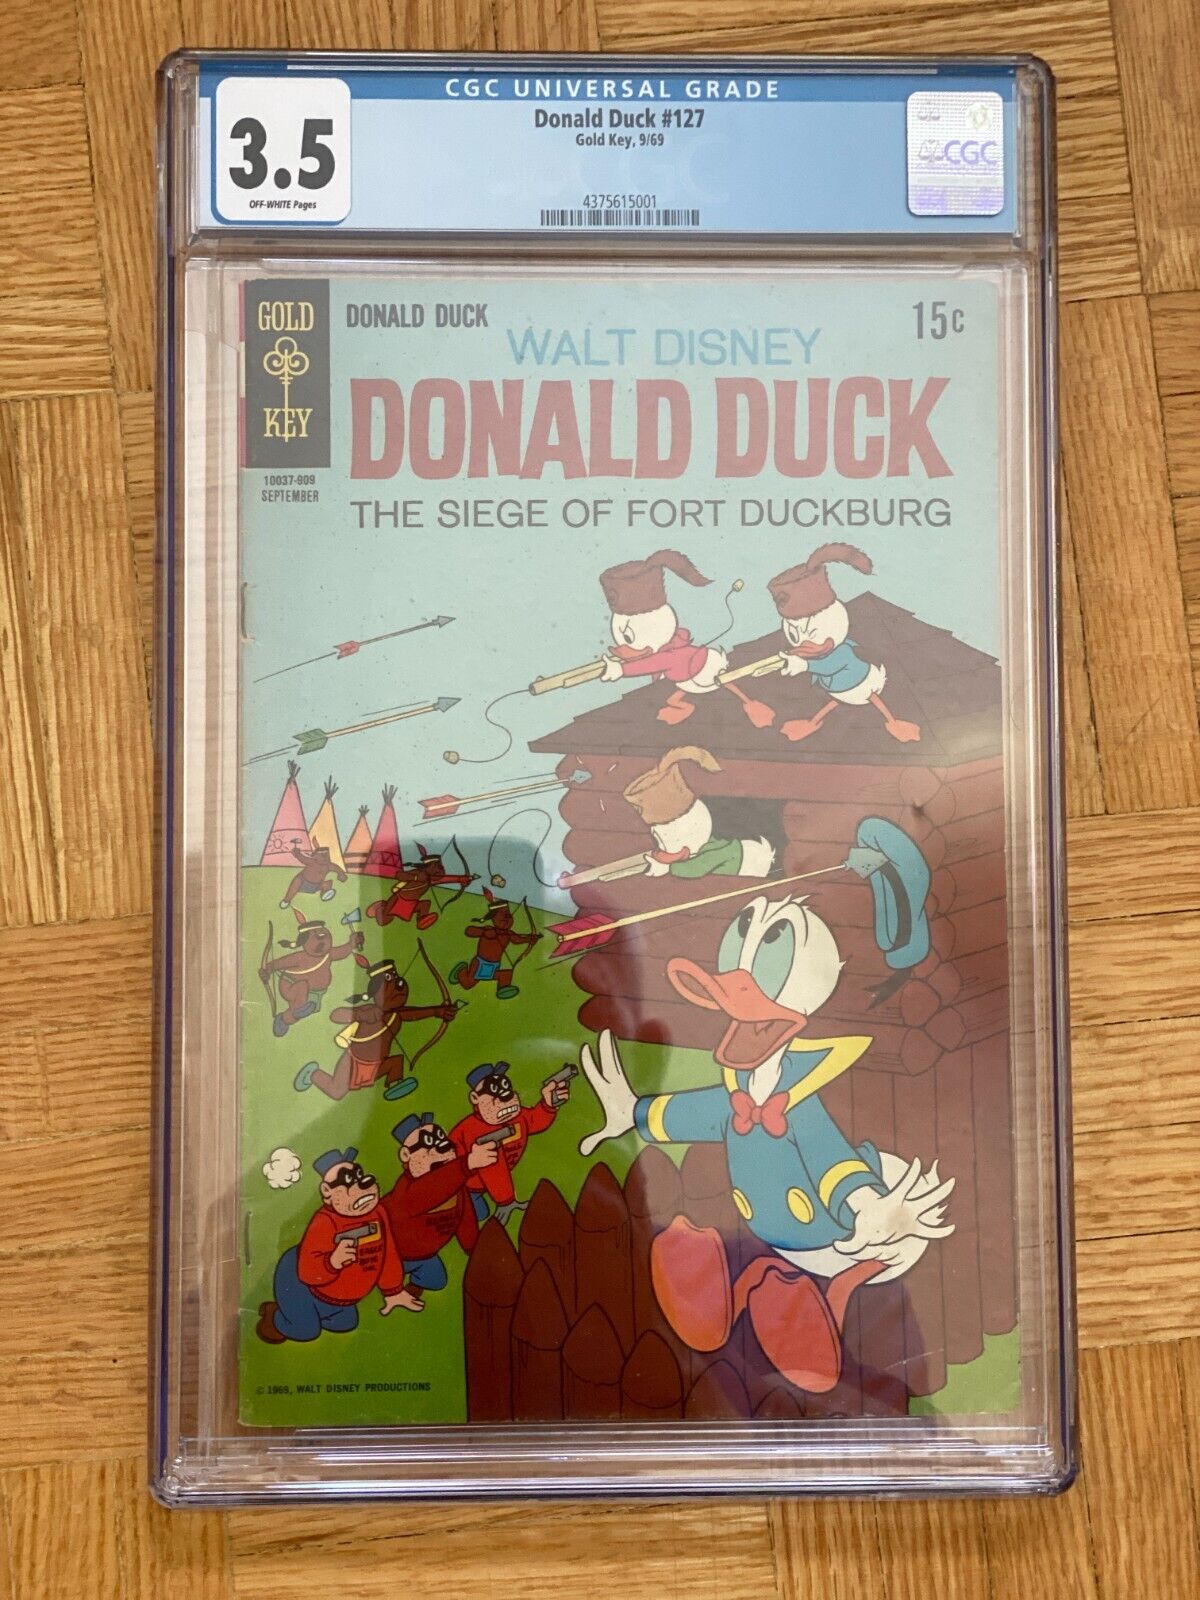 Donald Duck Gold Key 9/69, #127 CGC 3.5 Graded Comic.